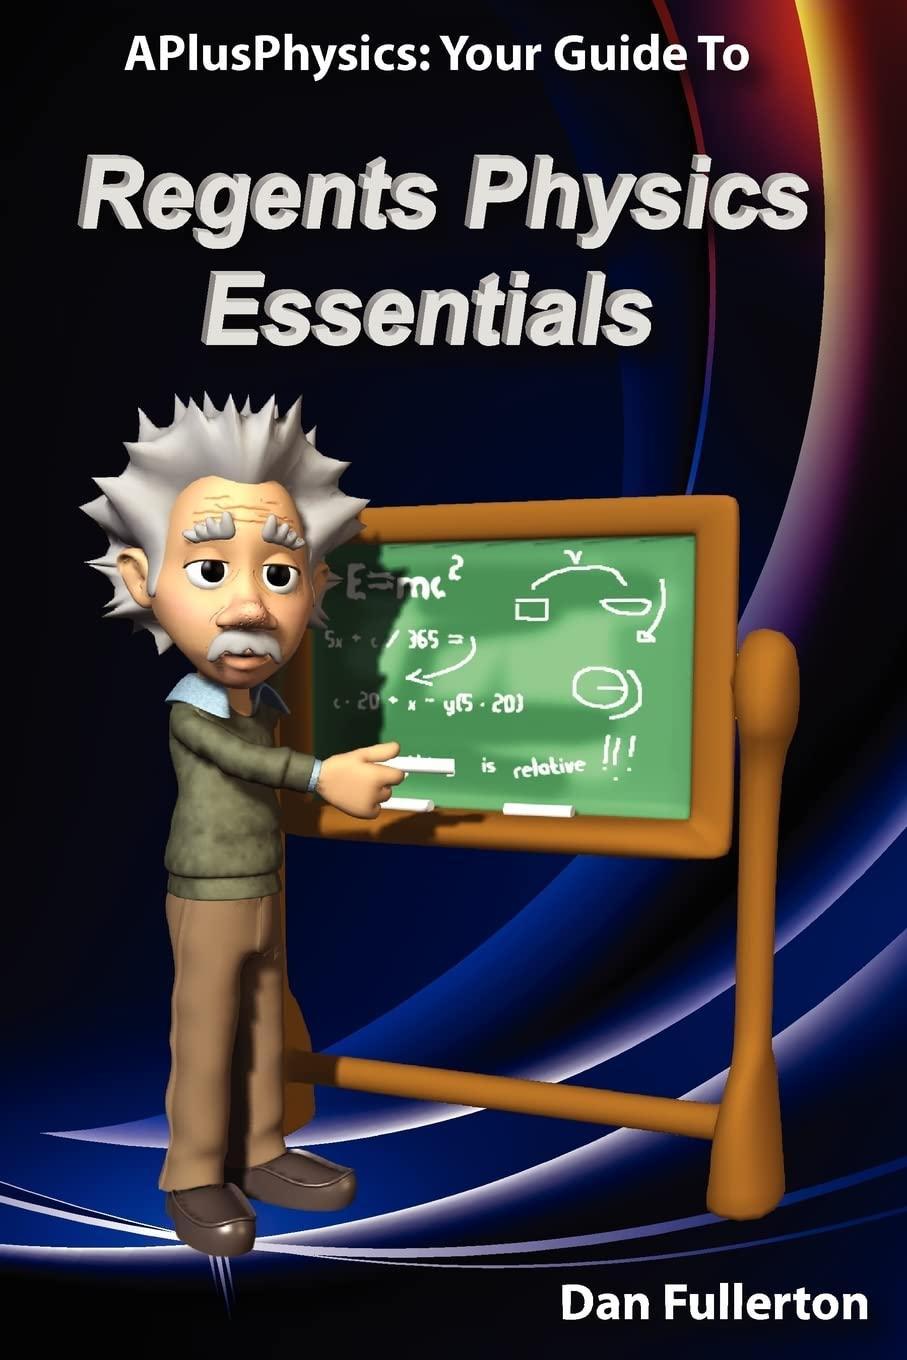 aplusphysics your guide to regents physics essentials 1st edition dan fullerton 0983563306, 978-0983563303